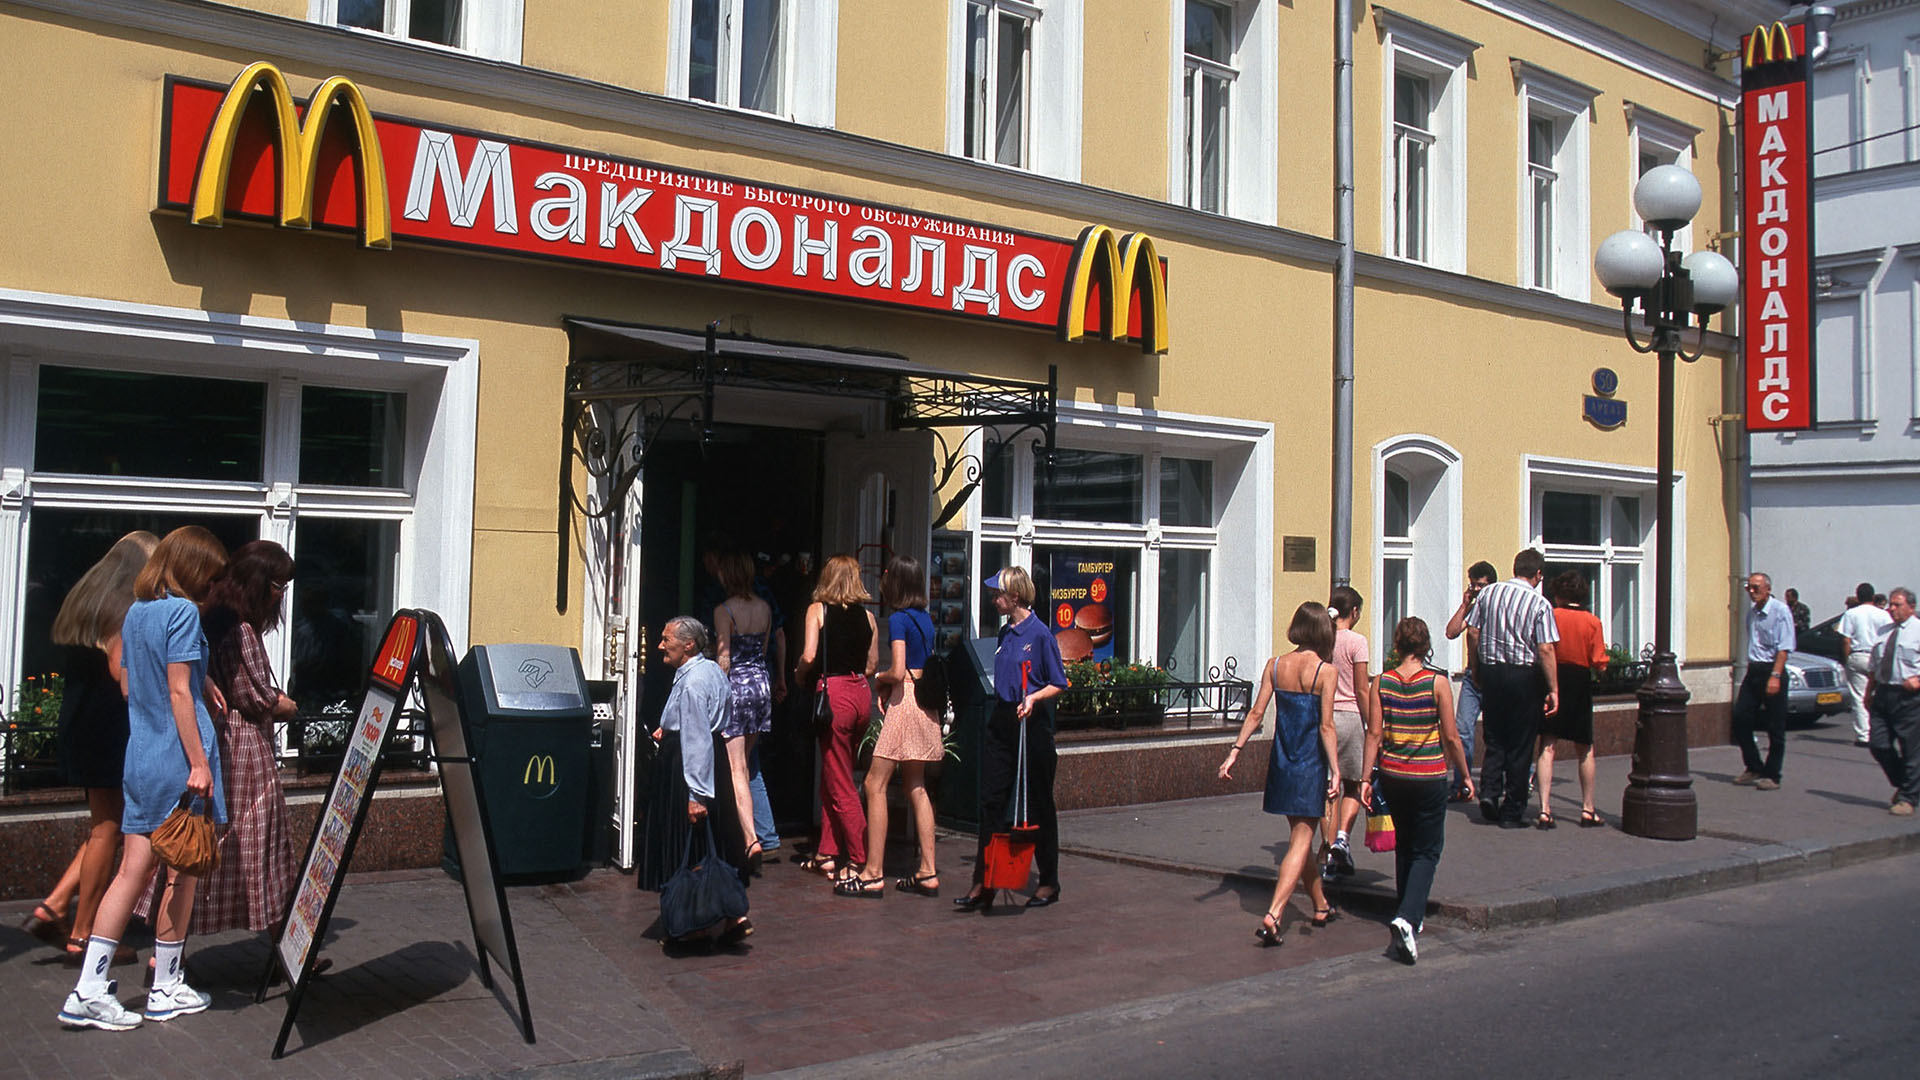 Local en la famosa calle peatonal Arbat en Moscú (The Grosby Group)